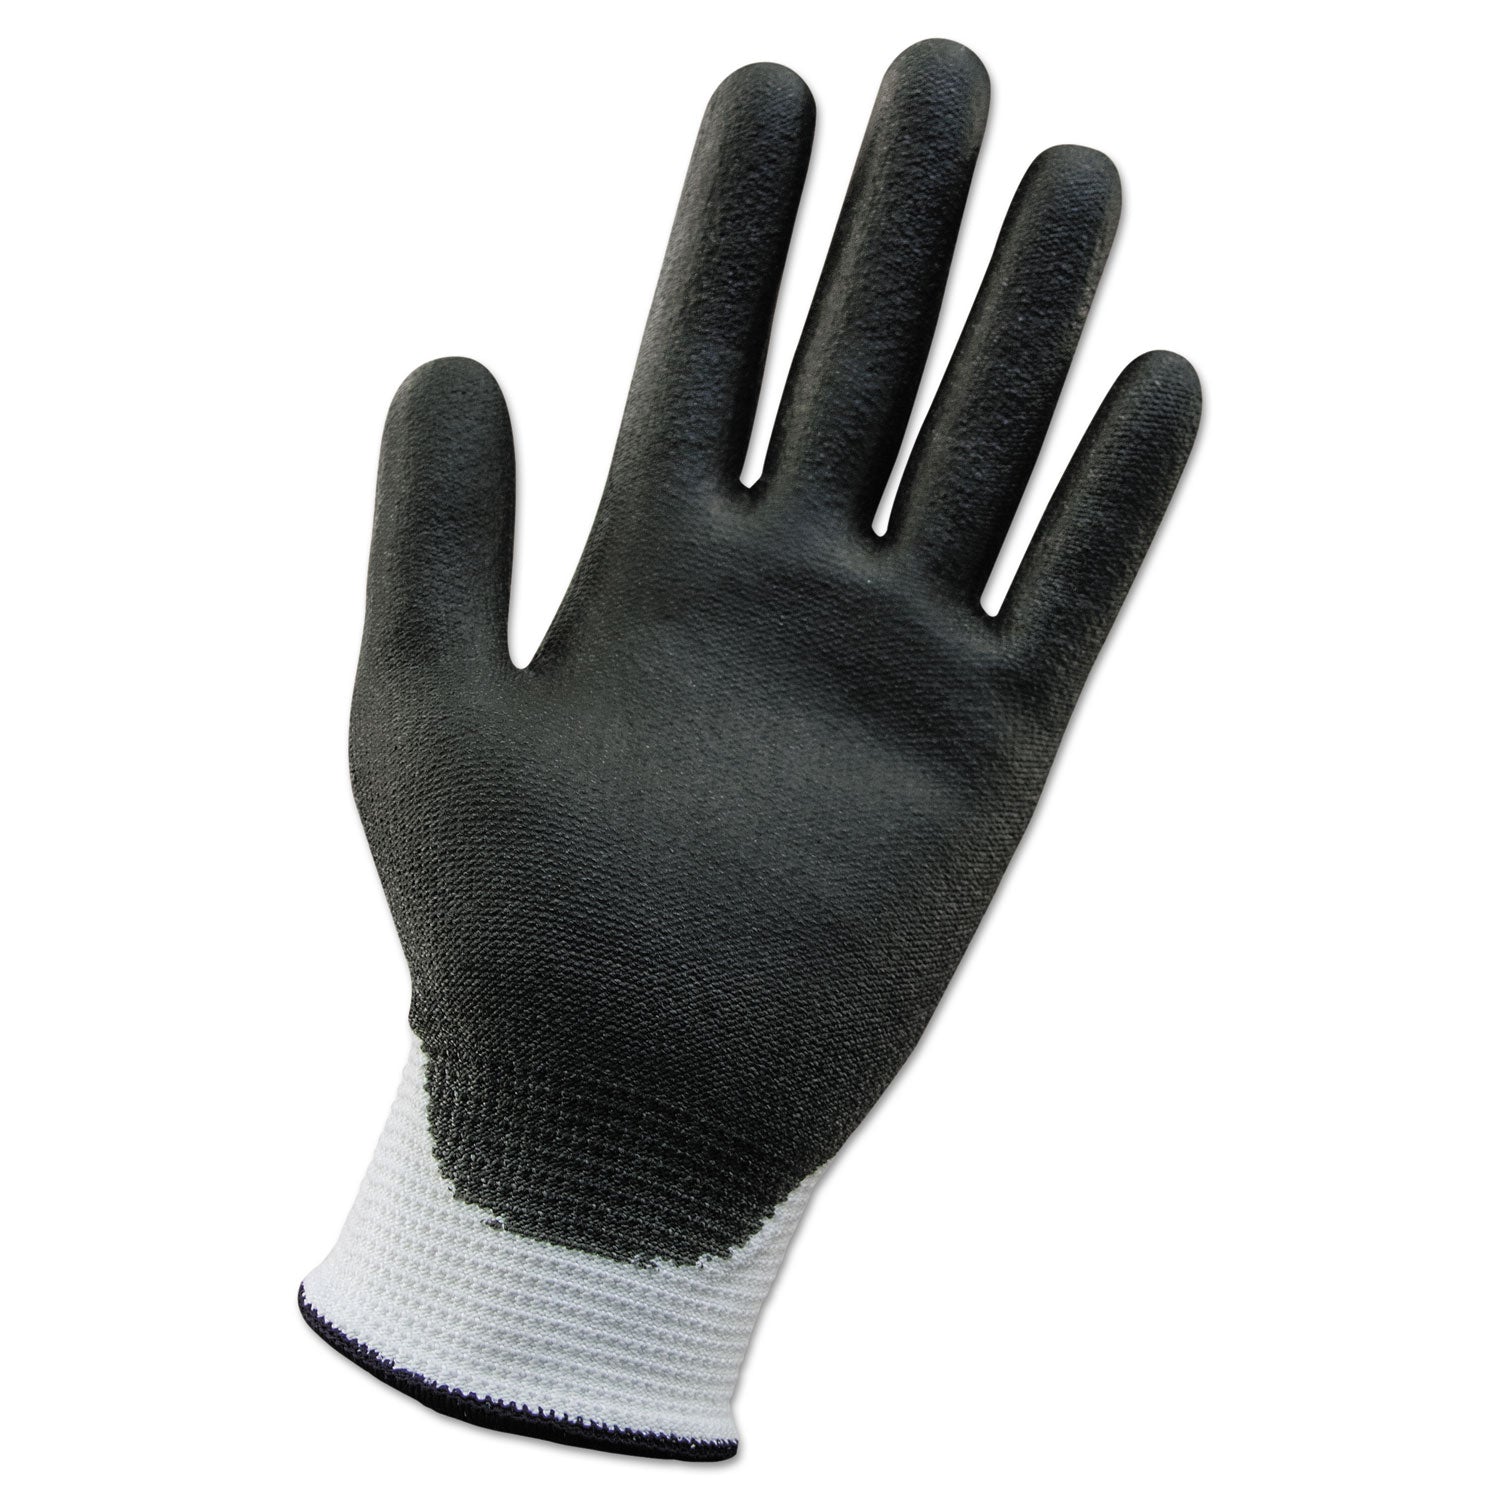 g60-ansi-level-2-cut-resistant-glove-230-mm-length-medium-size-8-white-black-12-pairs_kcc38690 - 1